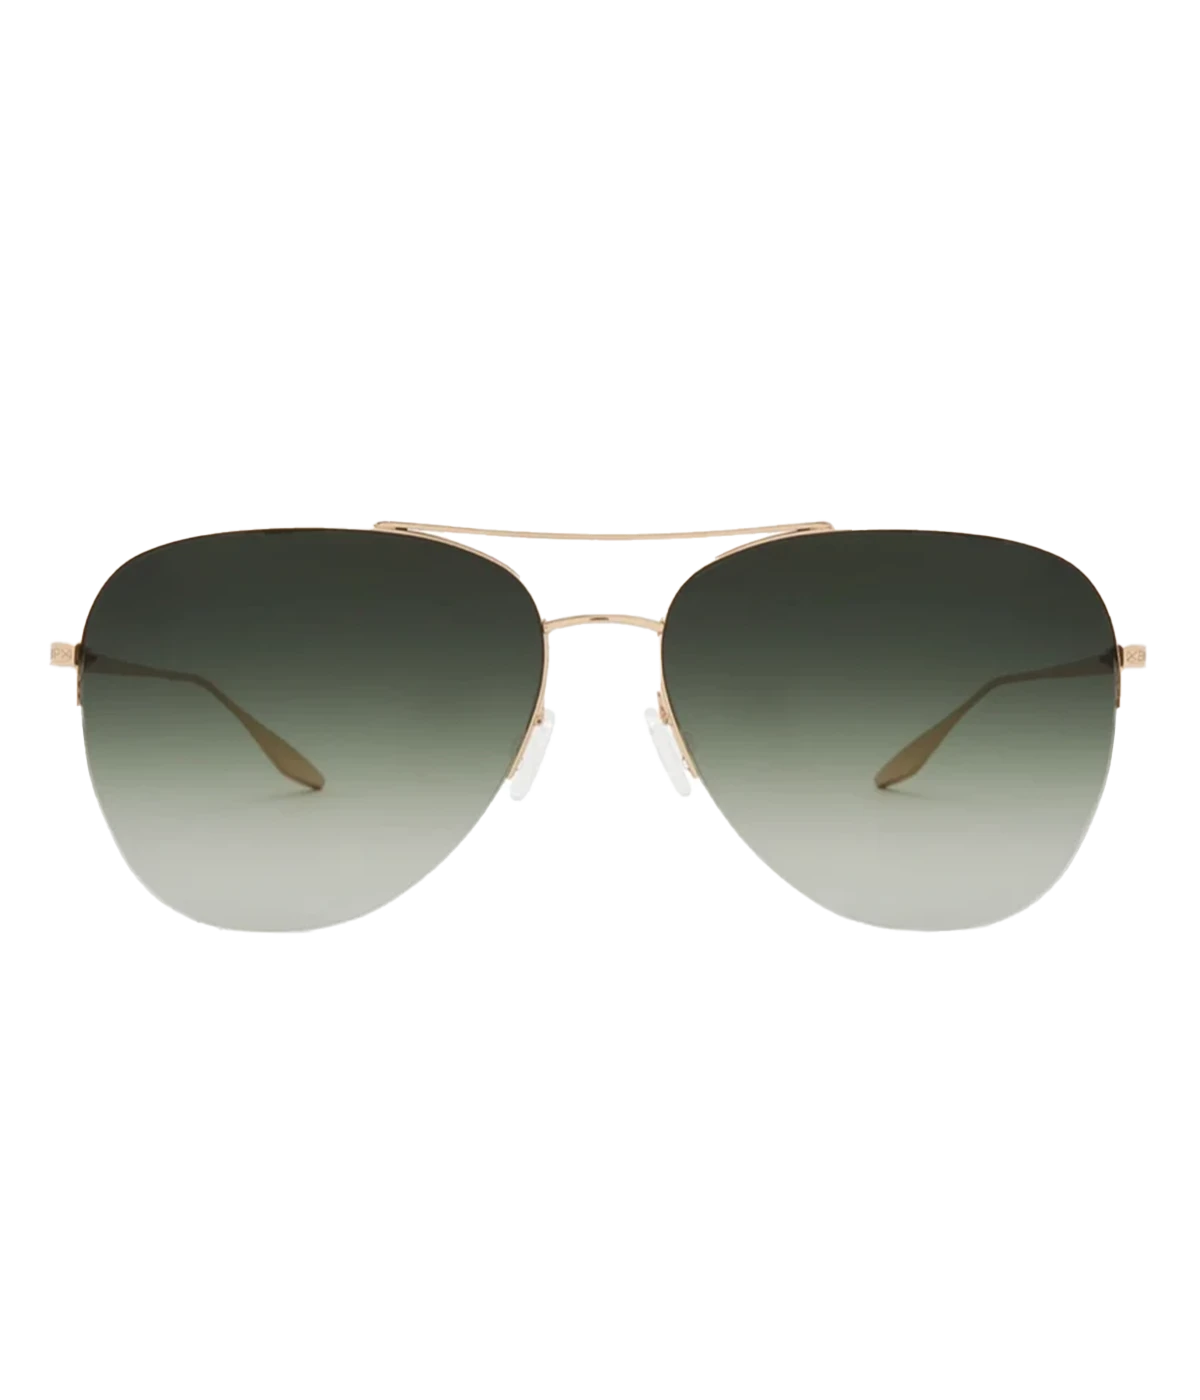 Chevalier Sunglasses in Gold & Green